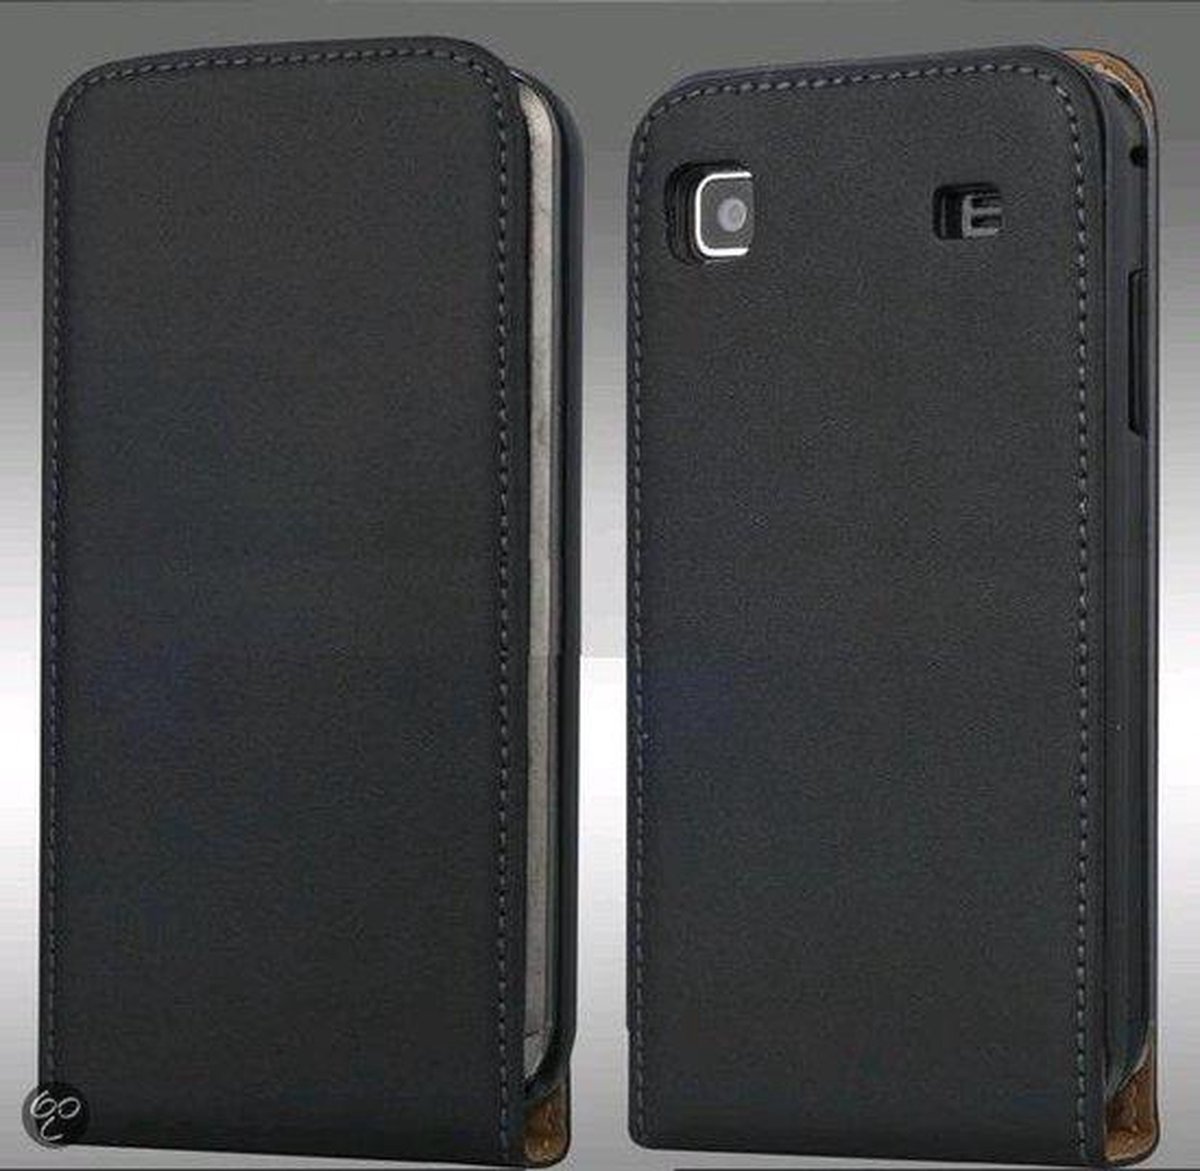 Galaxy i9000 Leather case